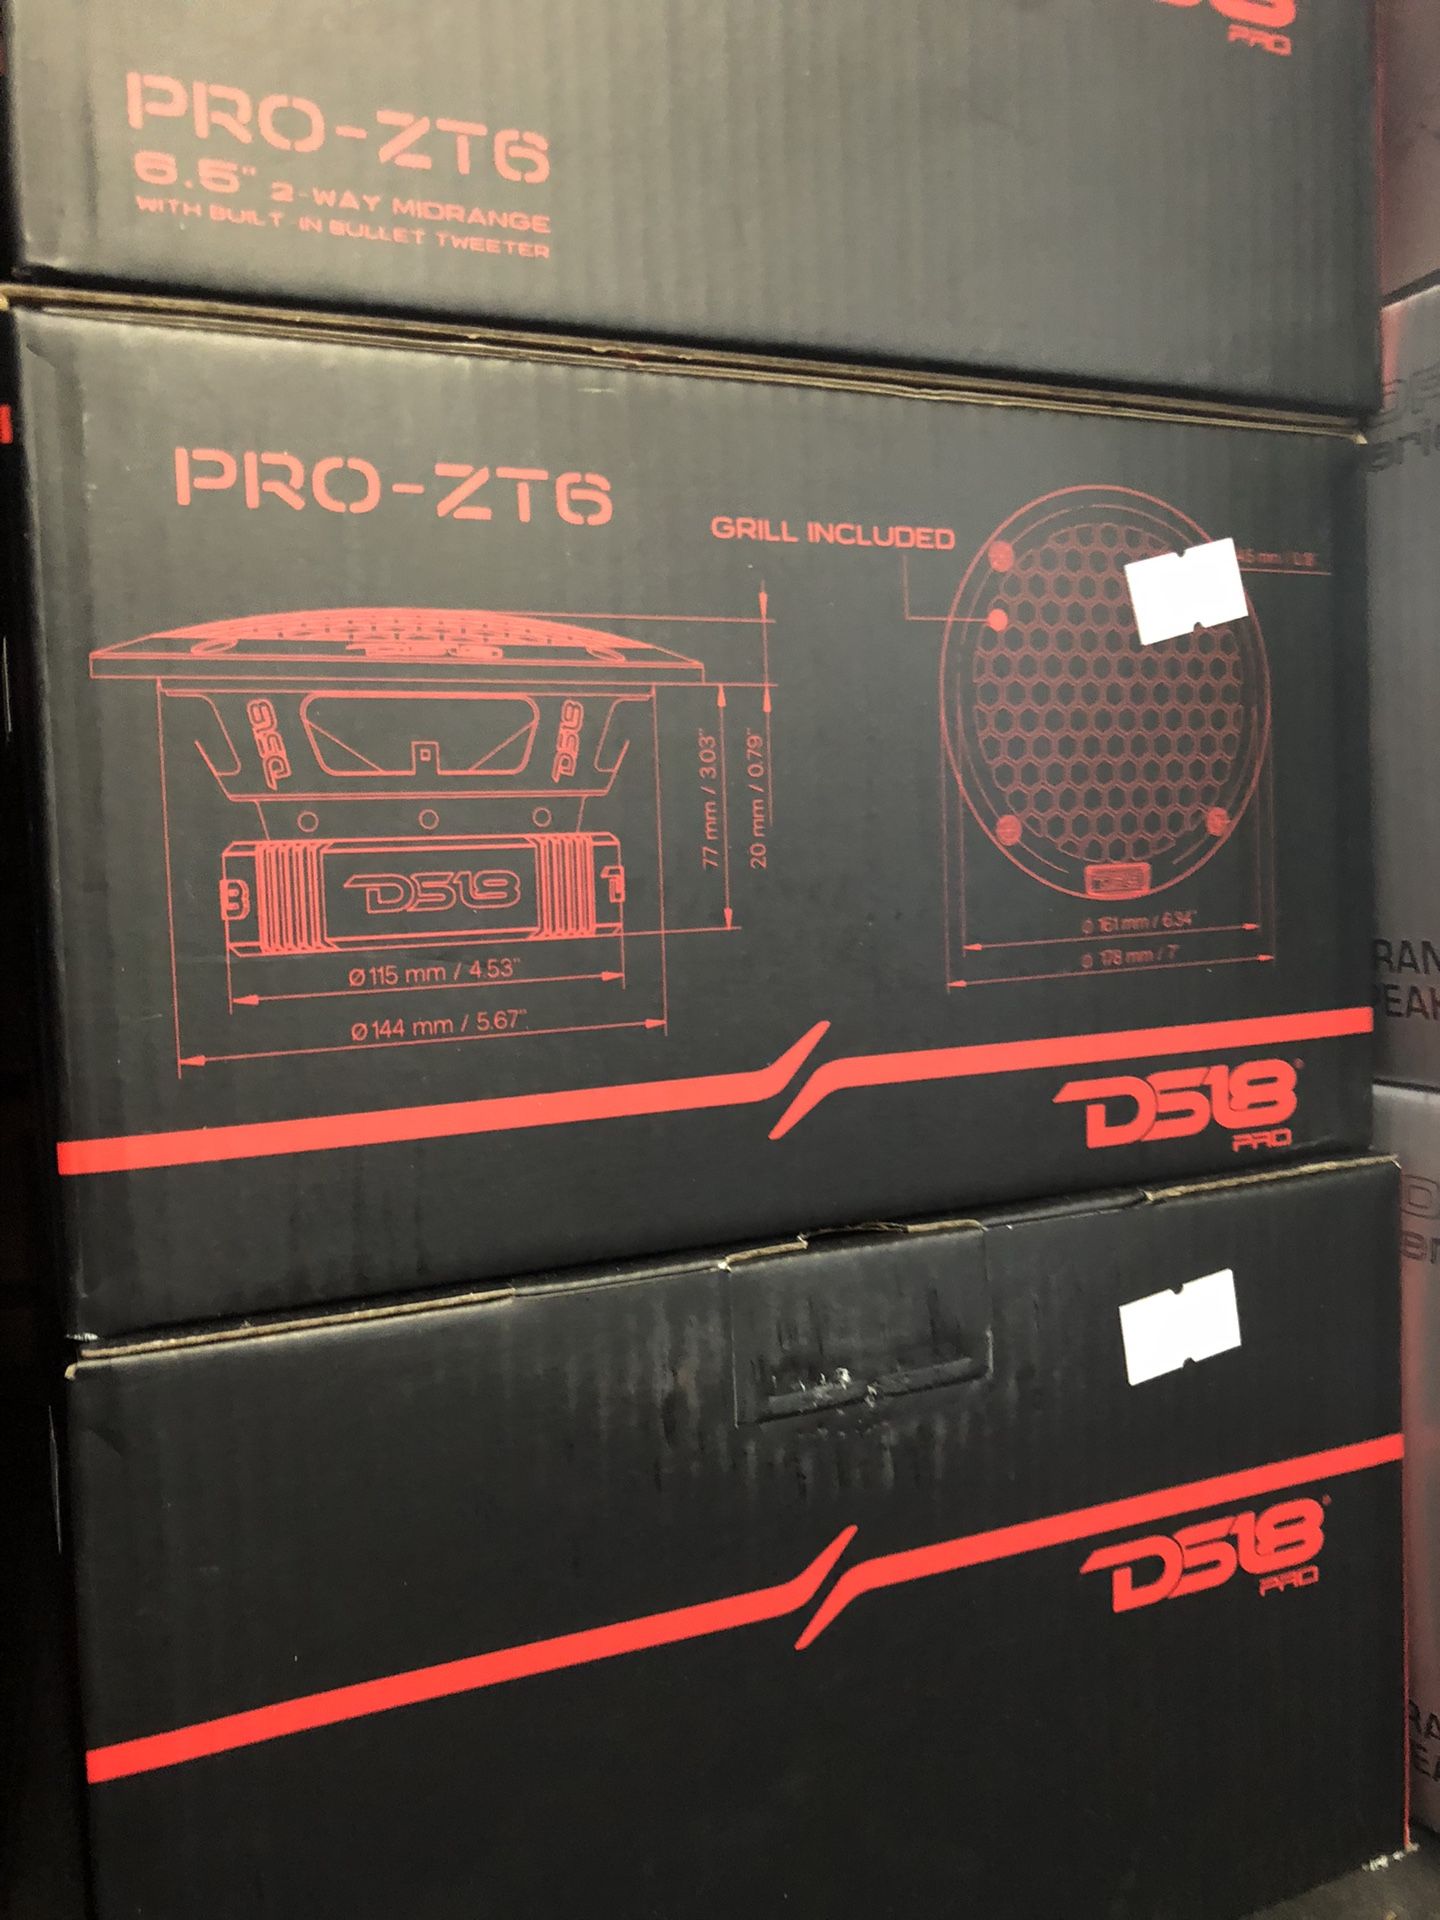 Ds18 Pro-zt6 On Sale For 79.99